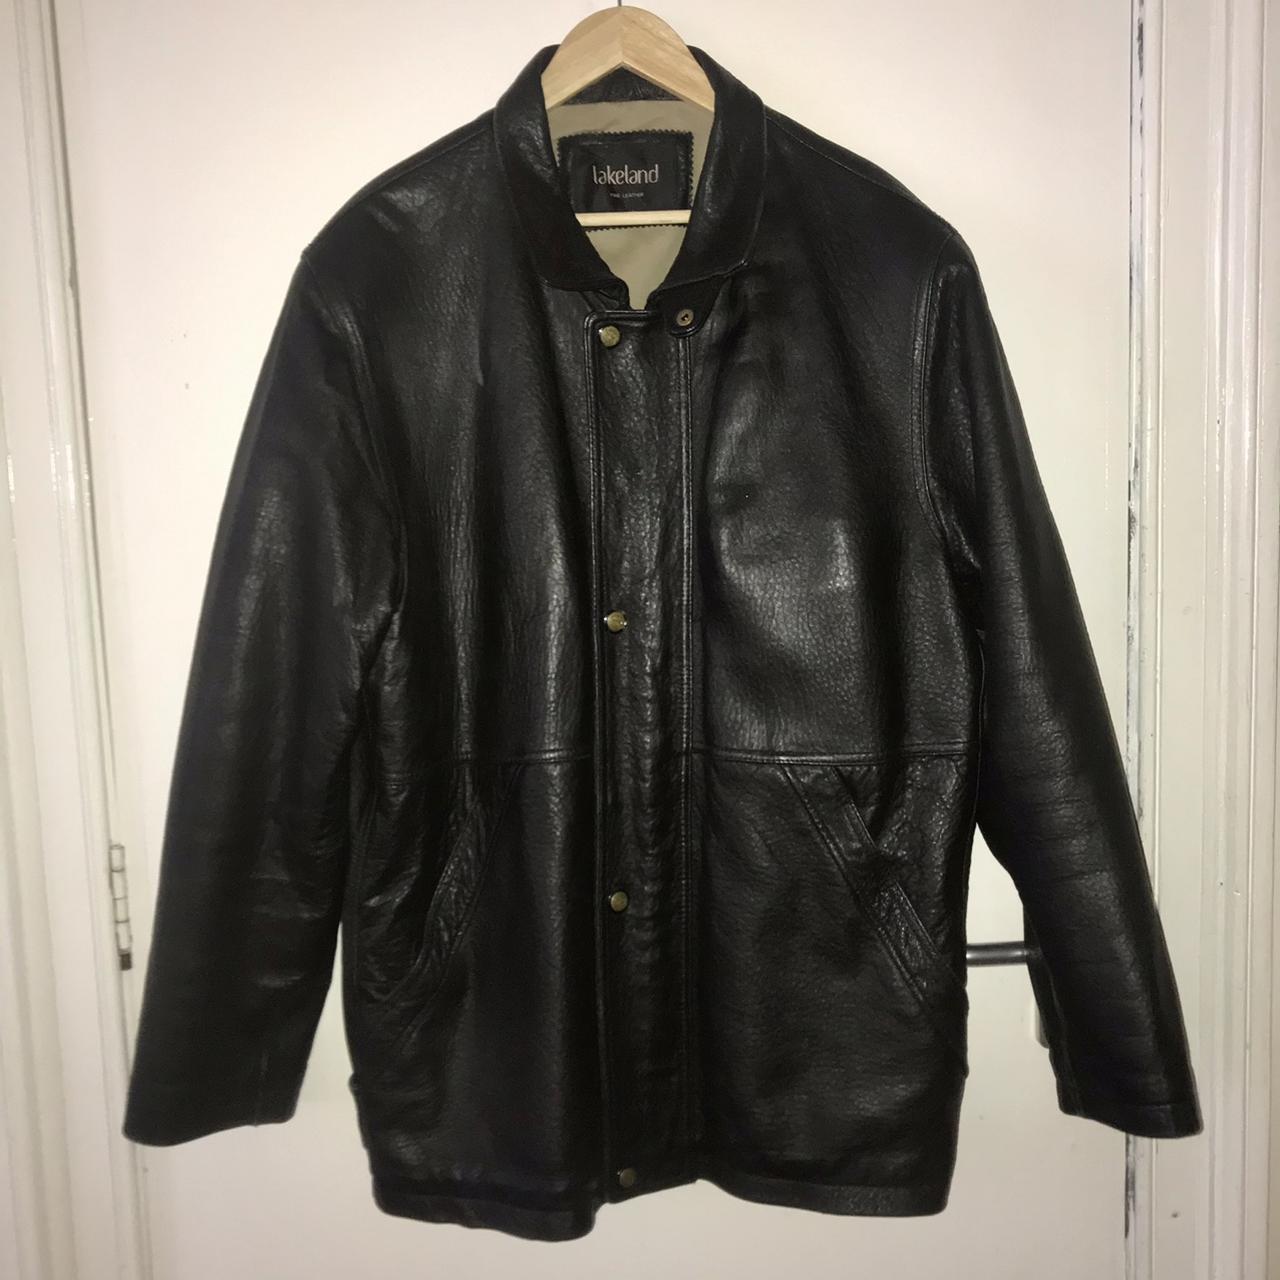 Vintage really heavy leather jacket - size XL So... - Depop